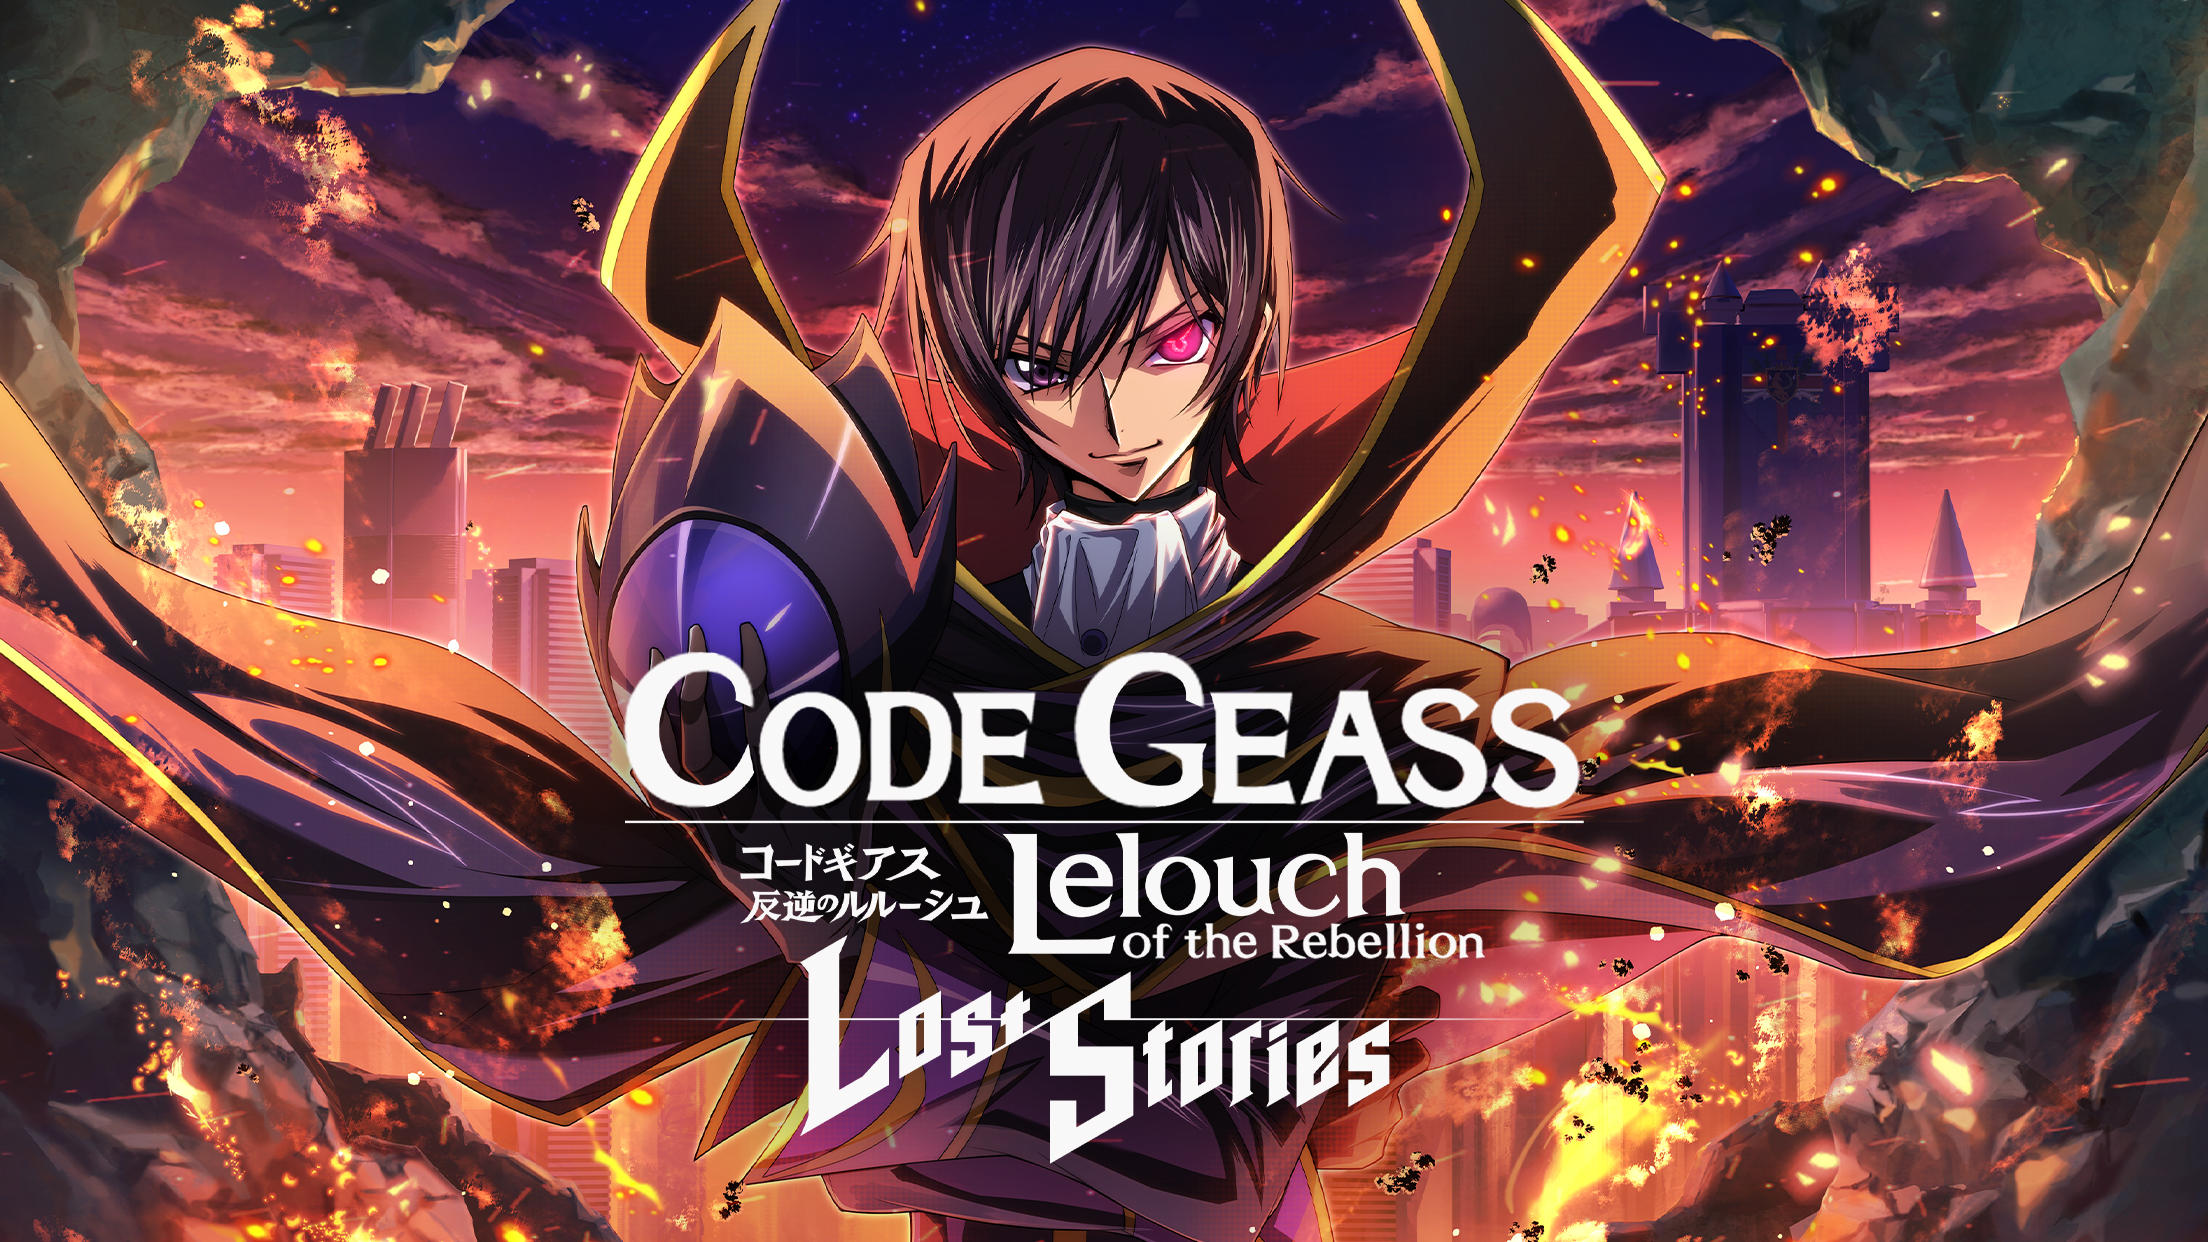 Code Geass: Lost Stories screenshot game